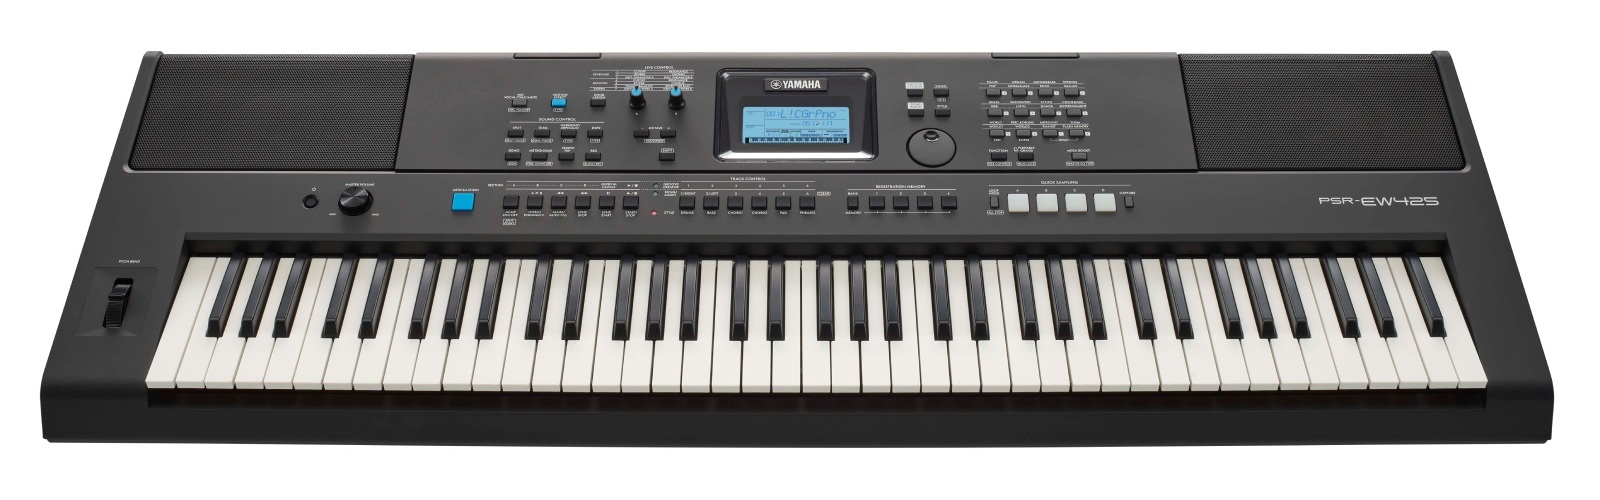 Yamaha Psr-ew425 - Entertainer Keyboard - Variation 2